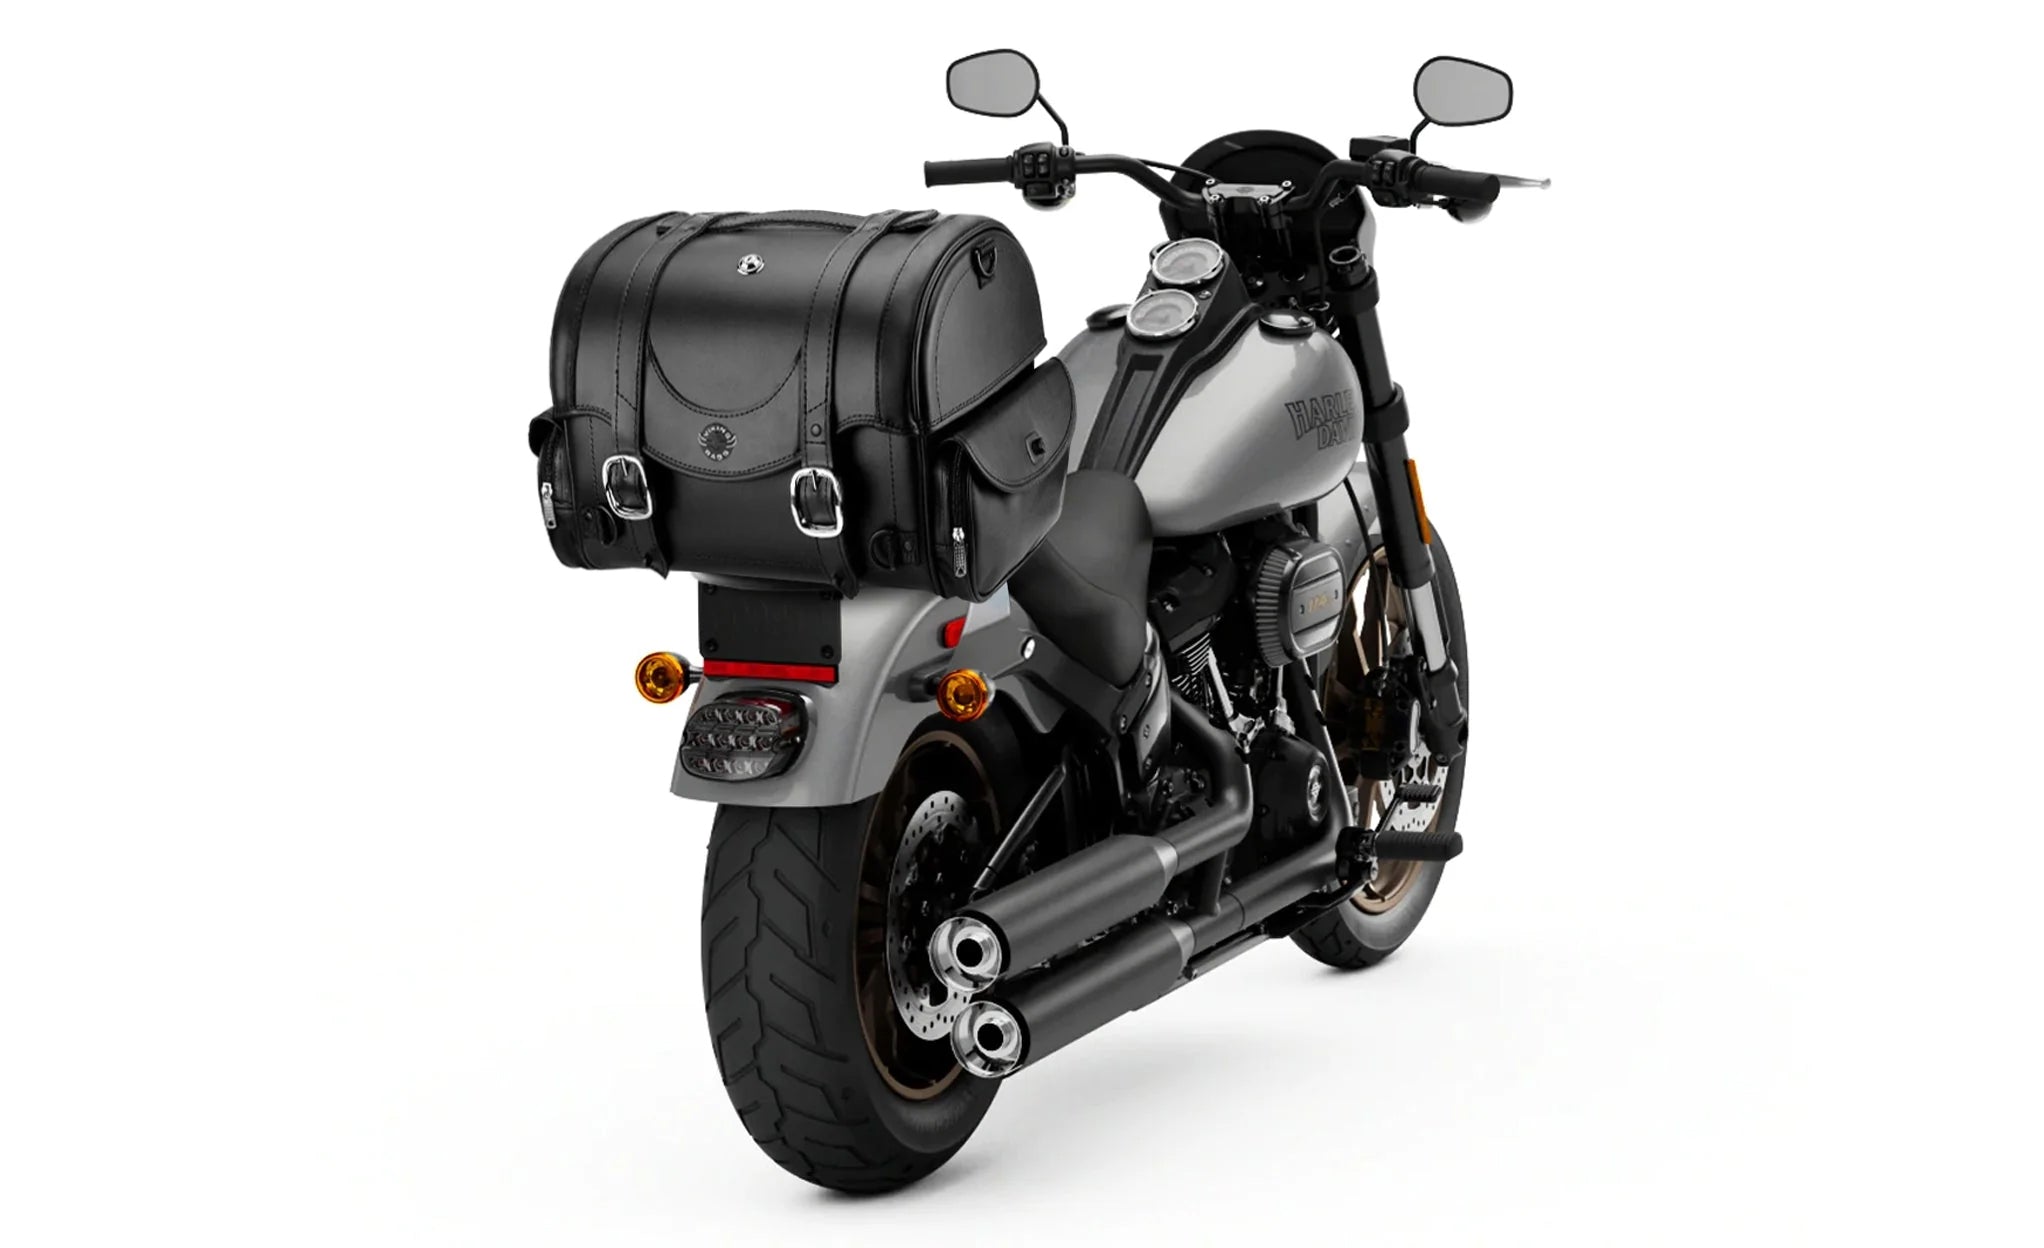 21L - Century Medium Indian Leather Motorcycle Trunk Bag on Bike Photo @expand